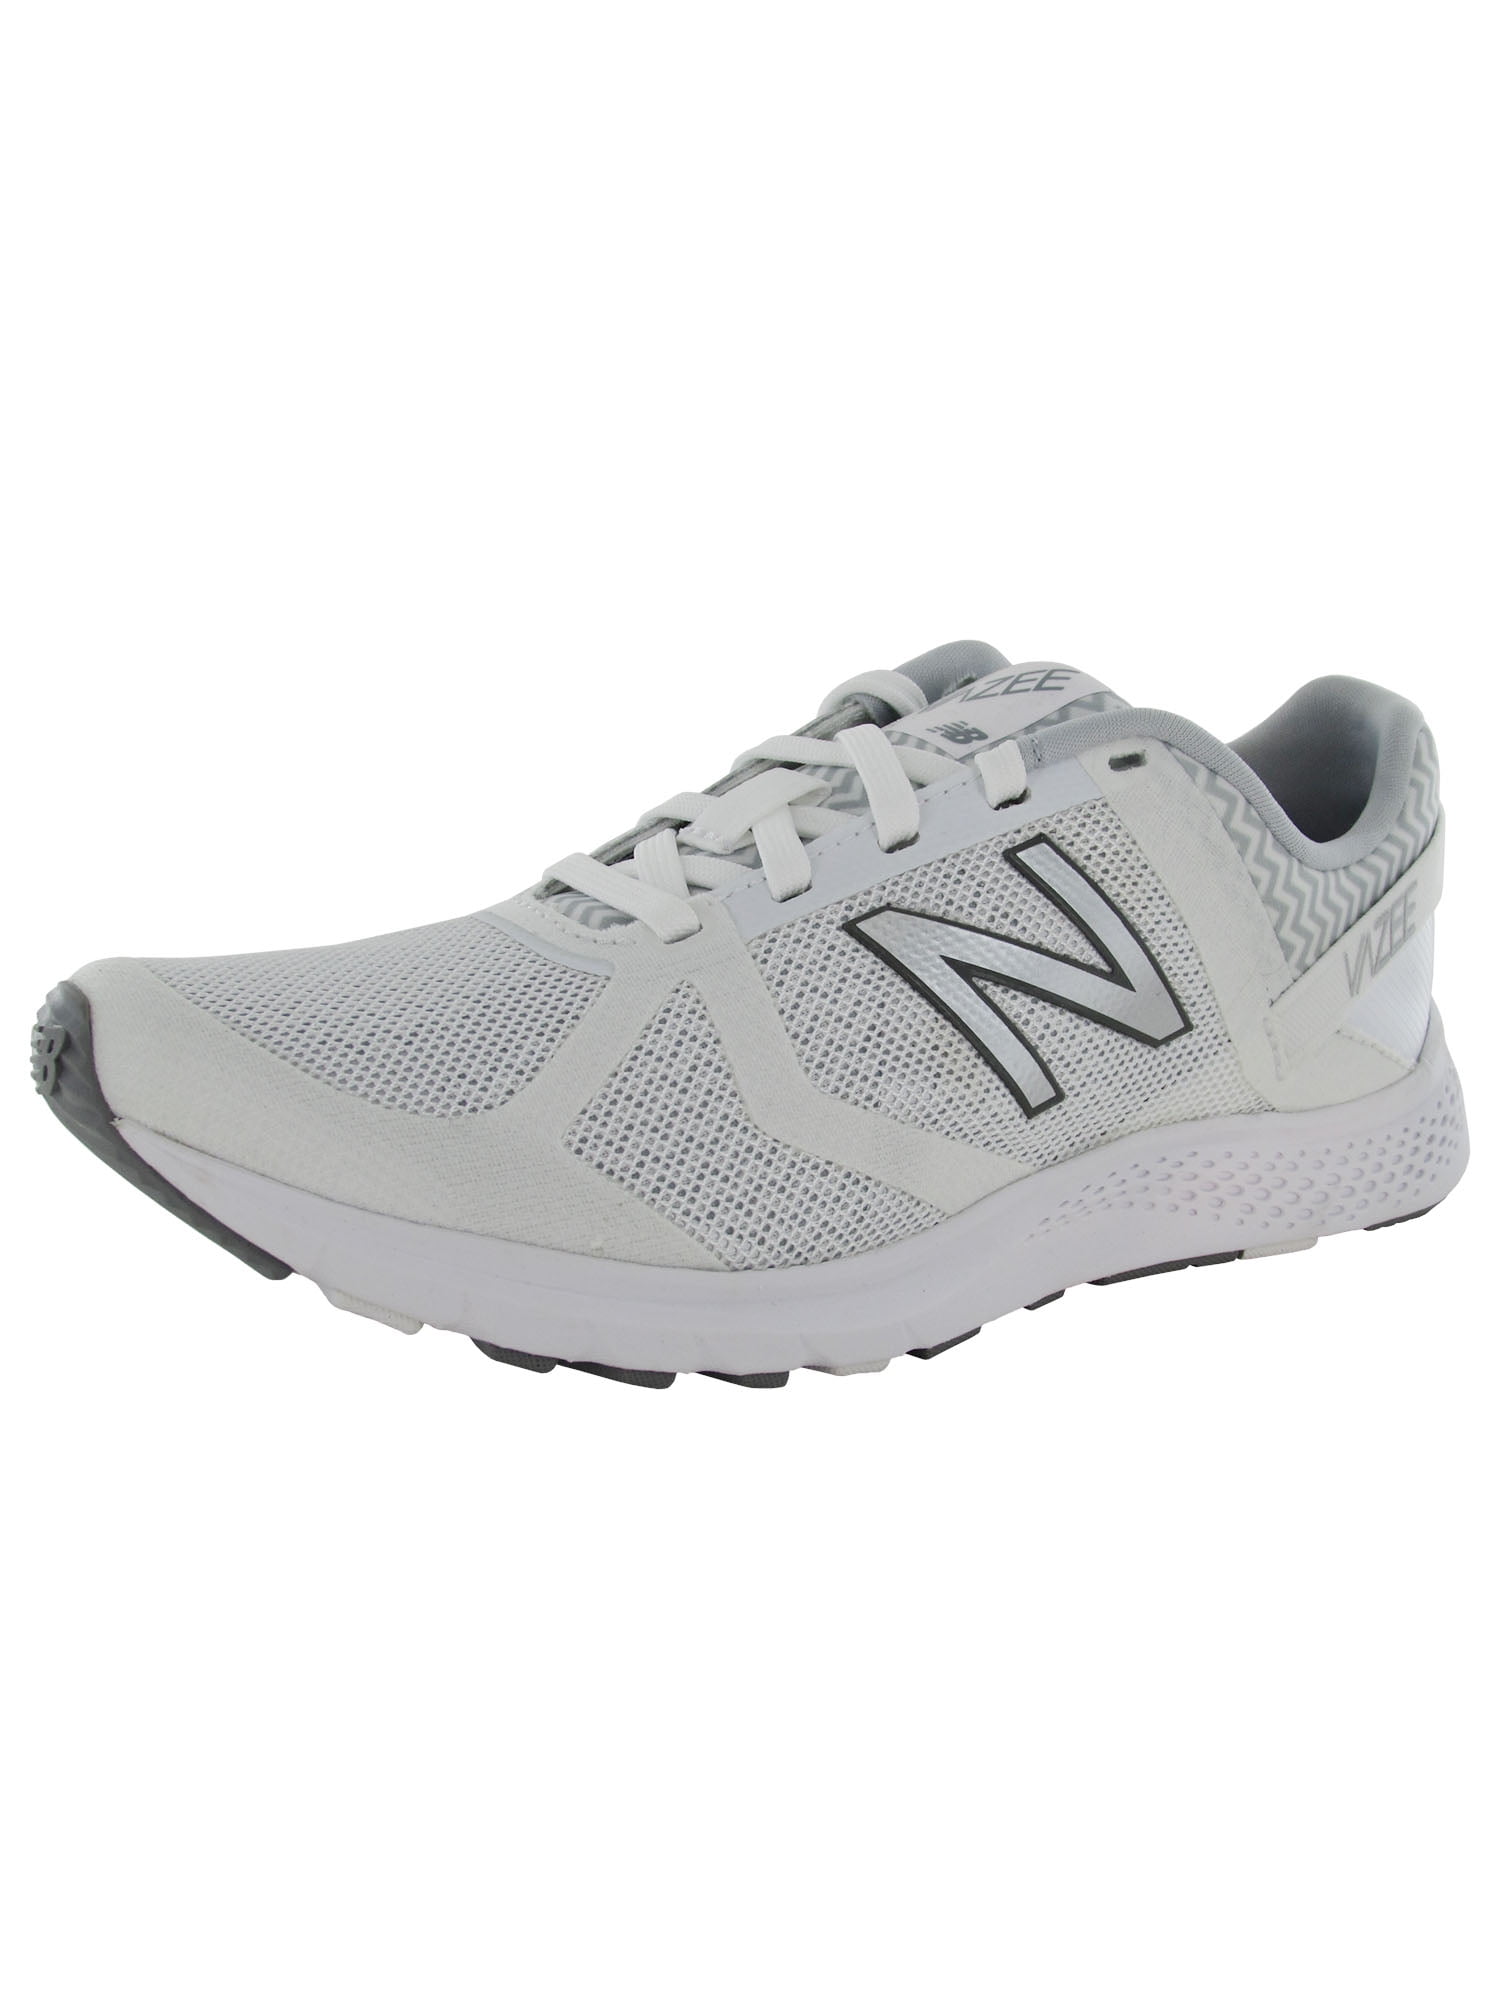 New Balance Vazee Graphic Trainer Shoes, White/Grey, US 7 Walmart.com